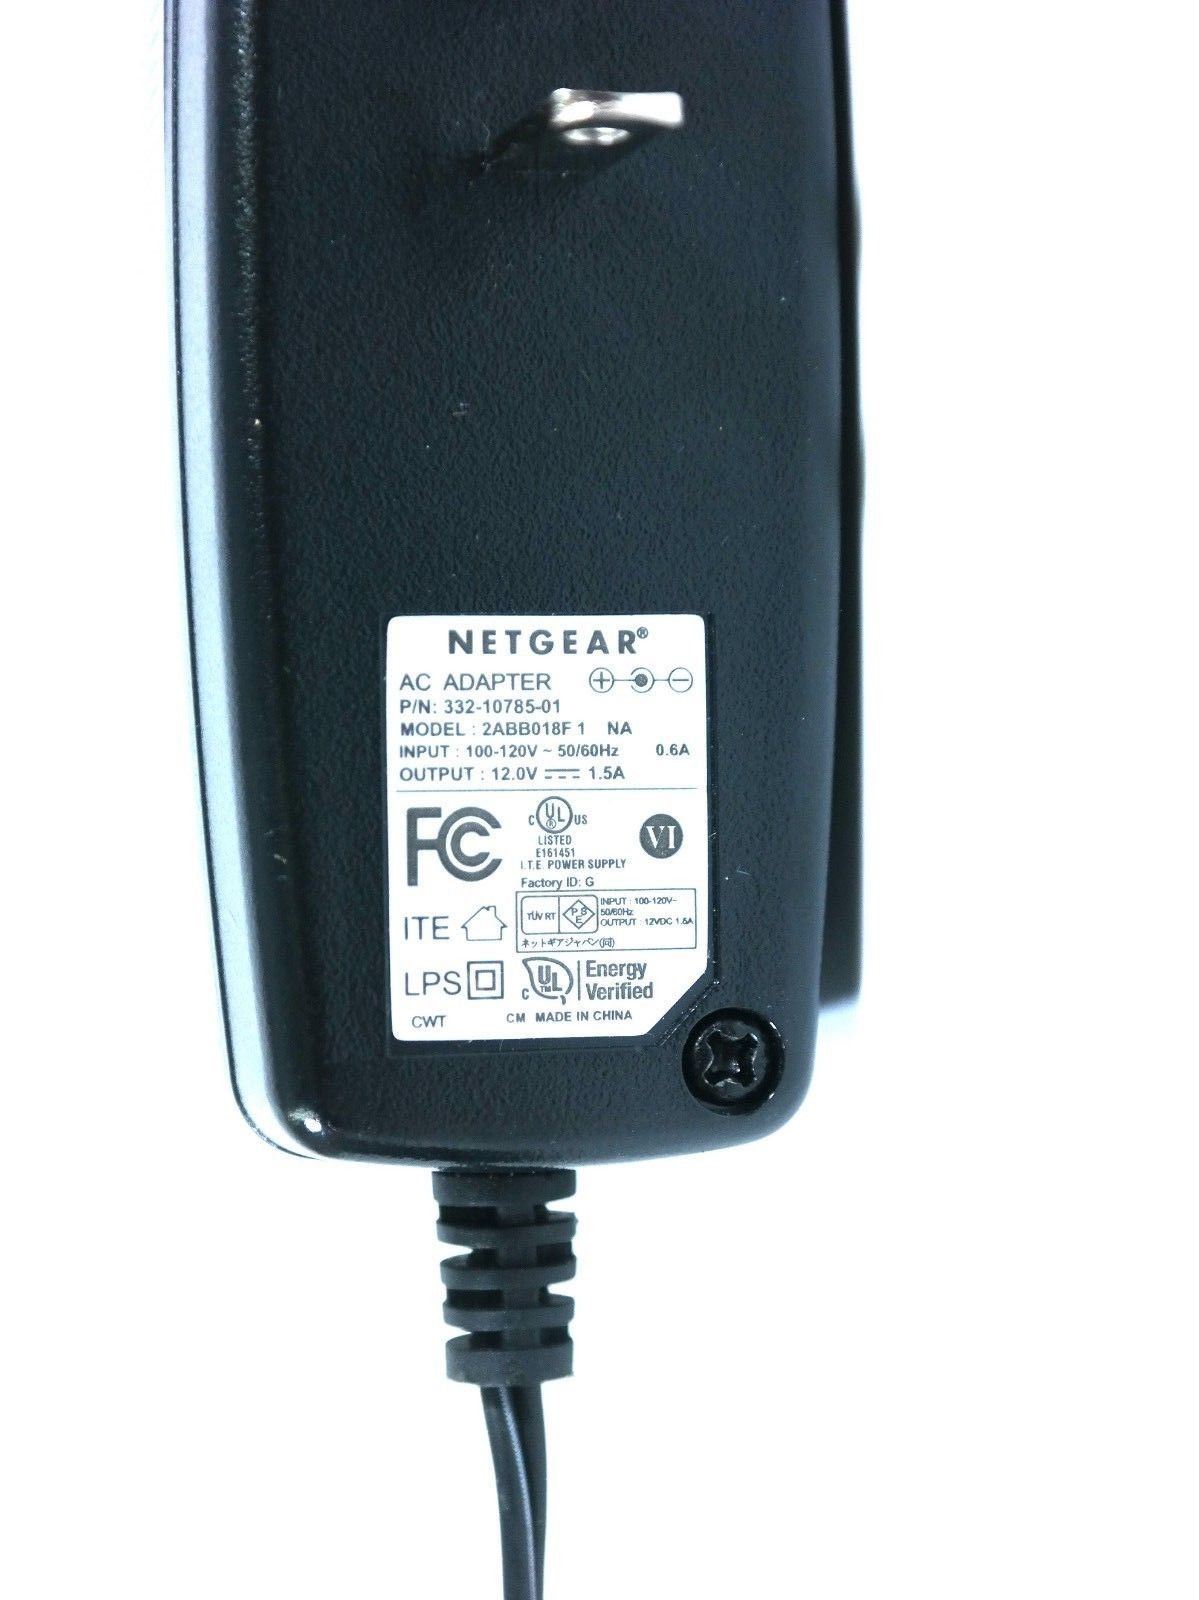 NEW 12V 1.5A Netgear 2ABB018F 1 NA 332-10785-01 AC Adapter